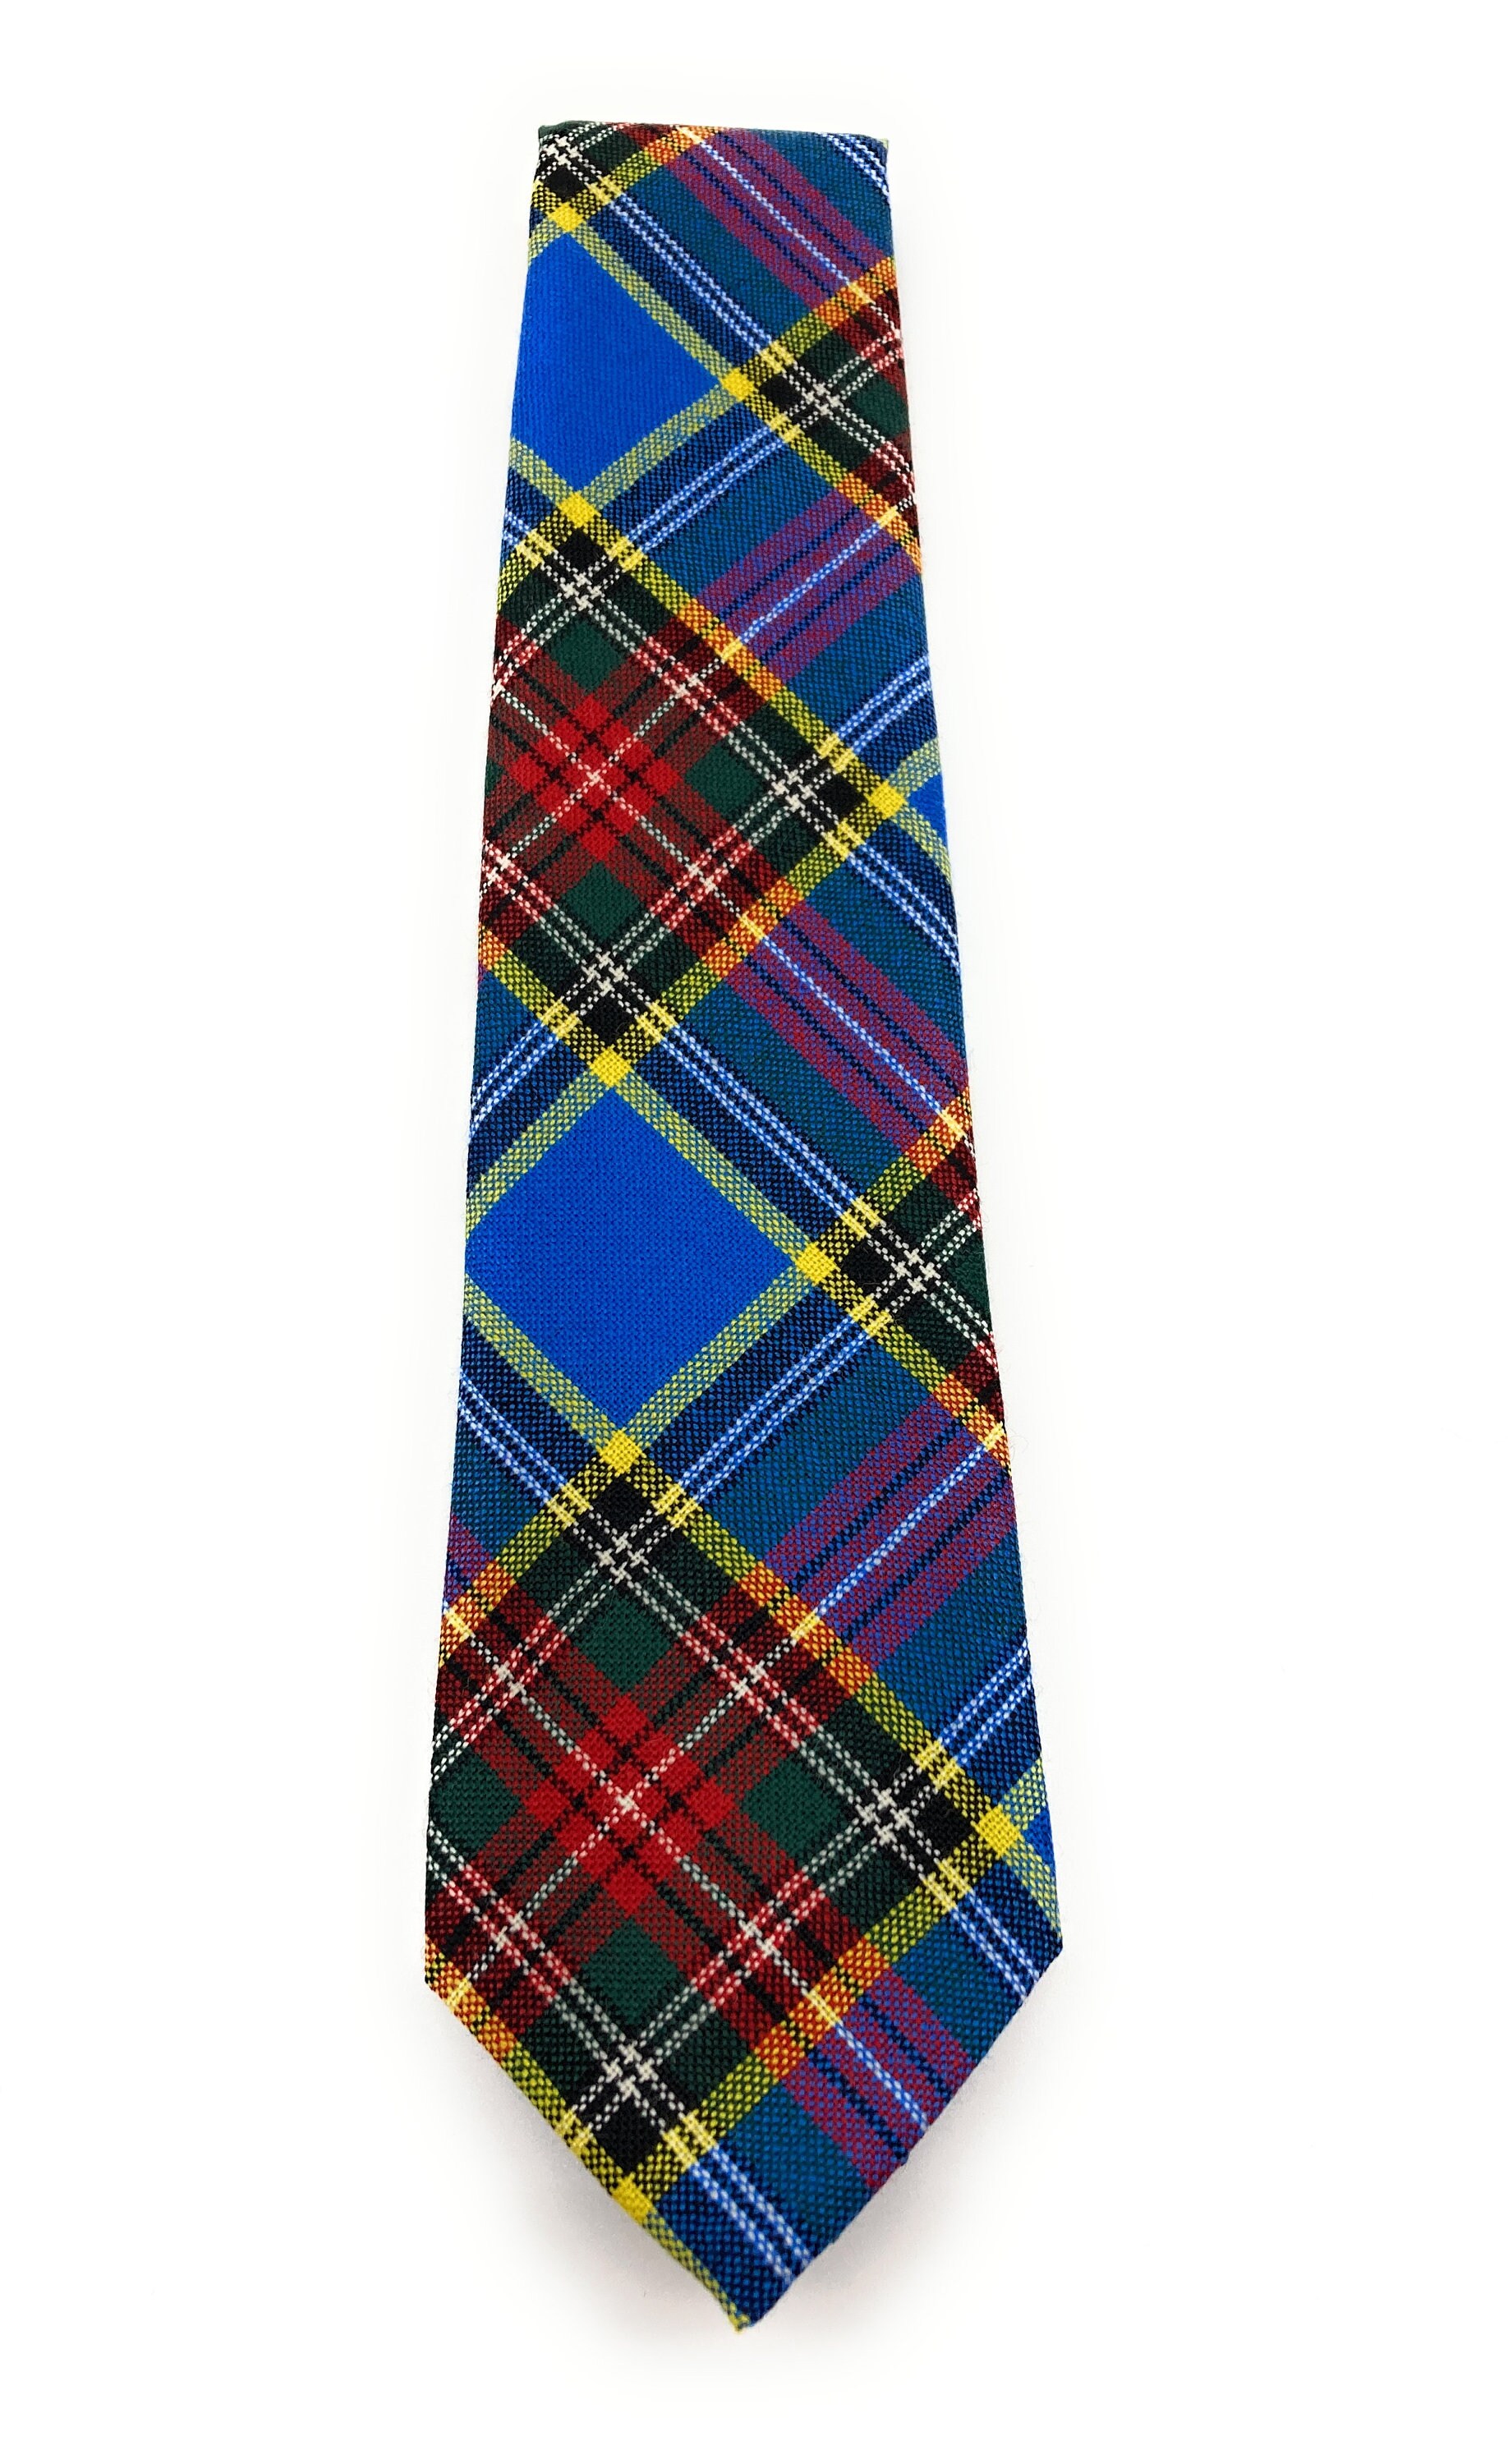 Cravate Tartan Macbeth Moderne 100% pure laine Kilt made in Scotland Menswear New 